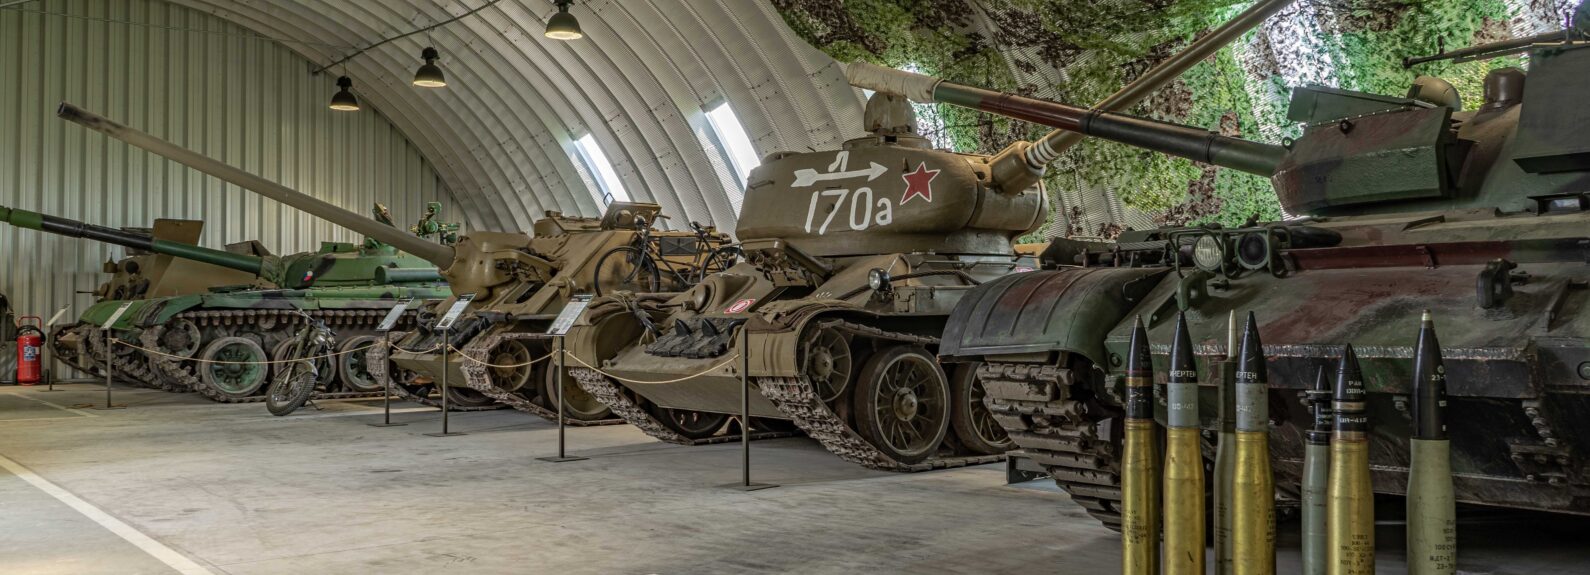 Military Museum Slovakia Ring 34 1